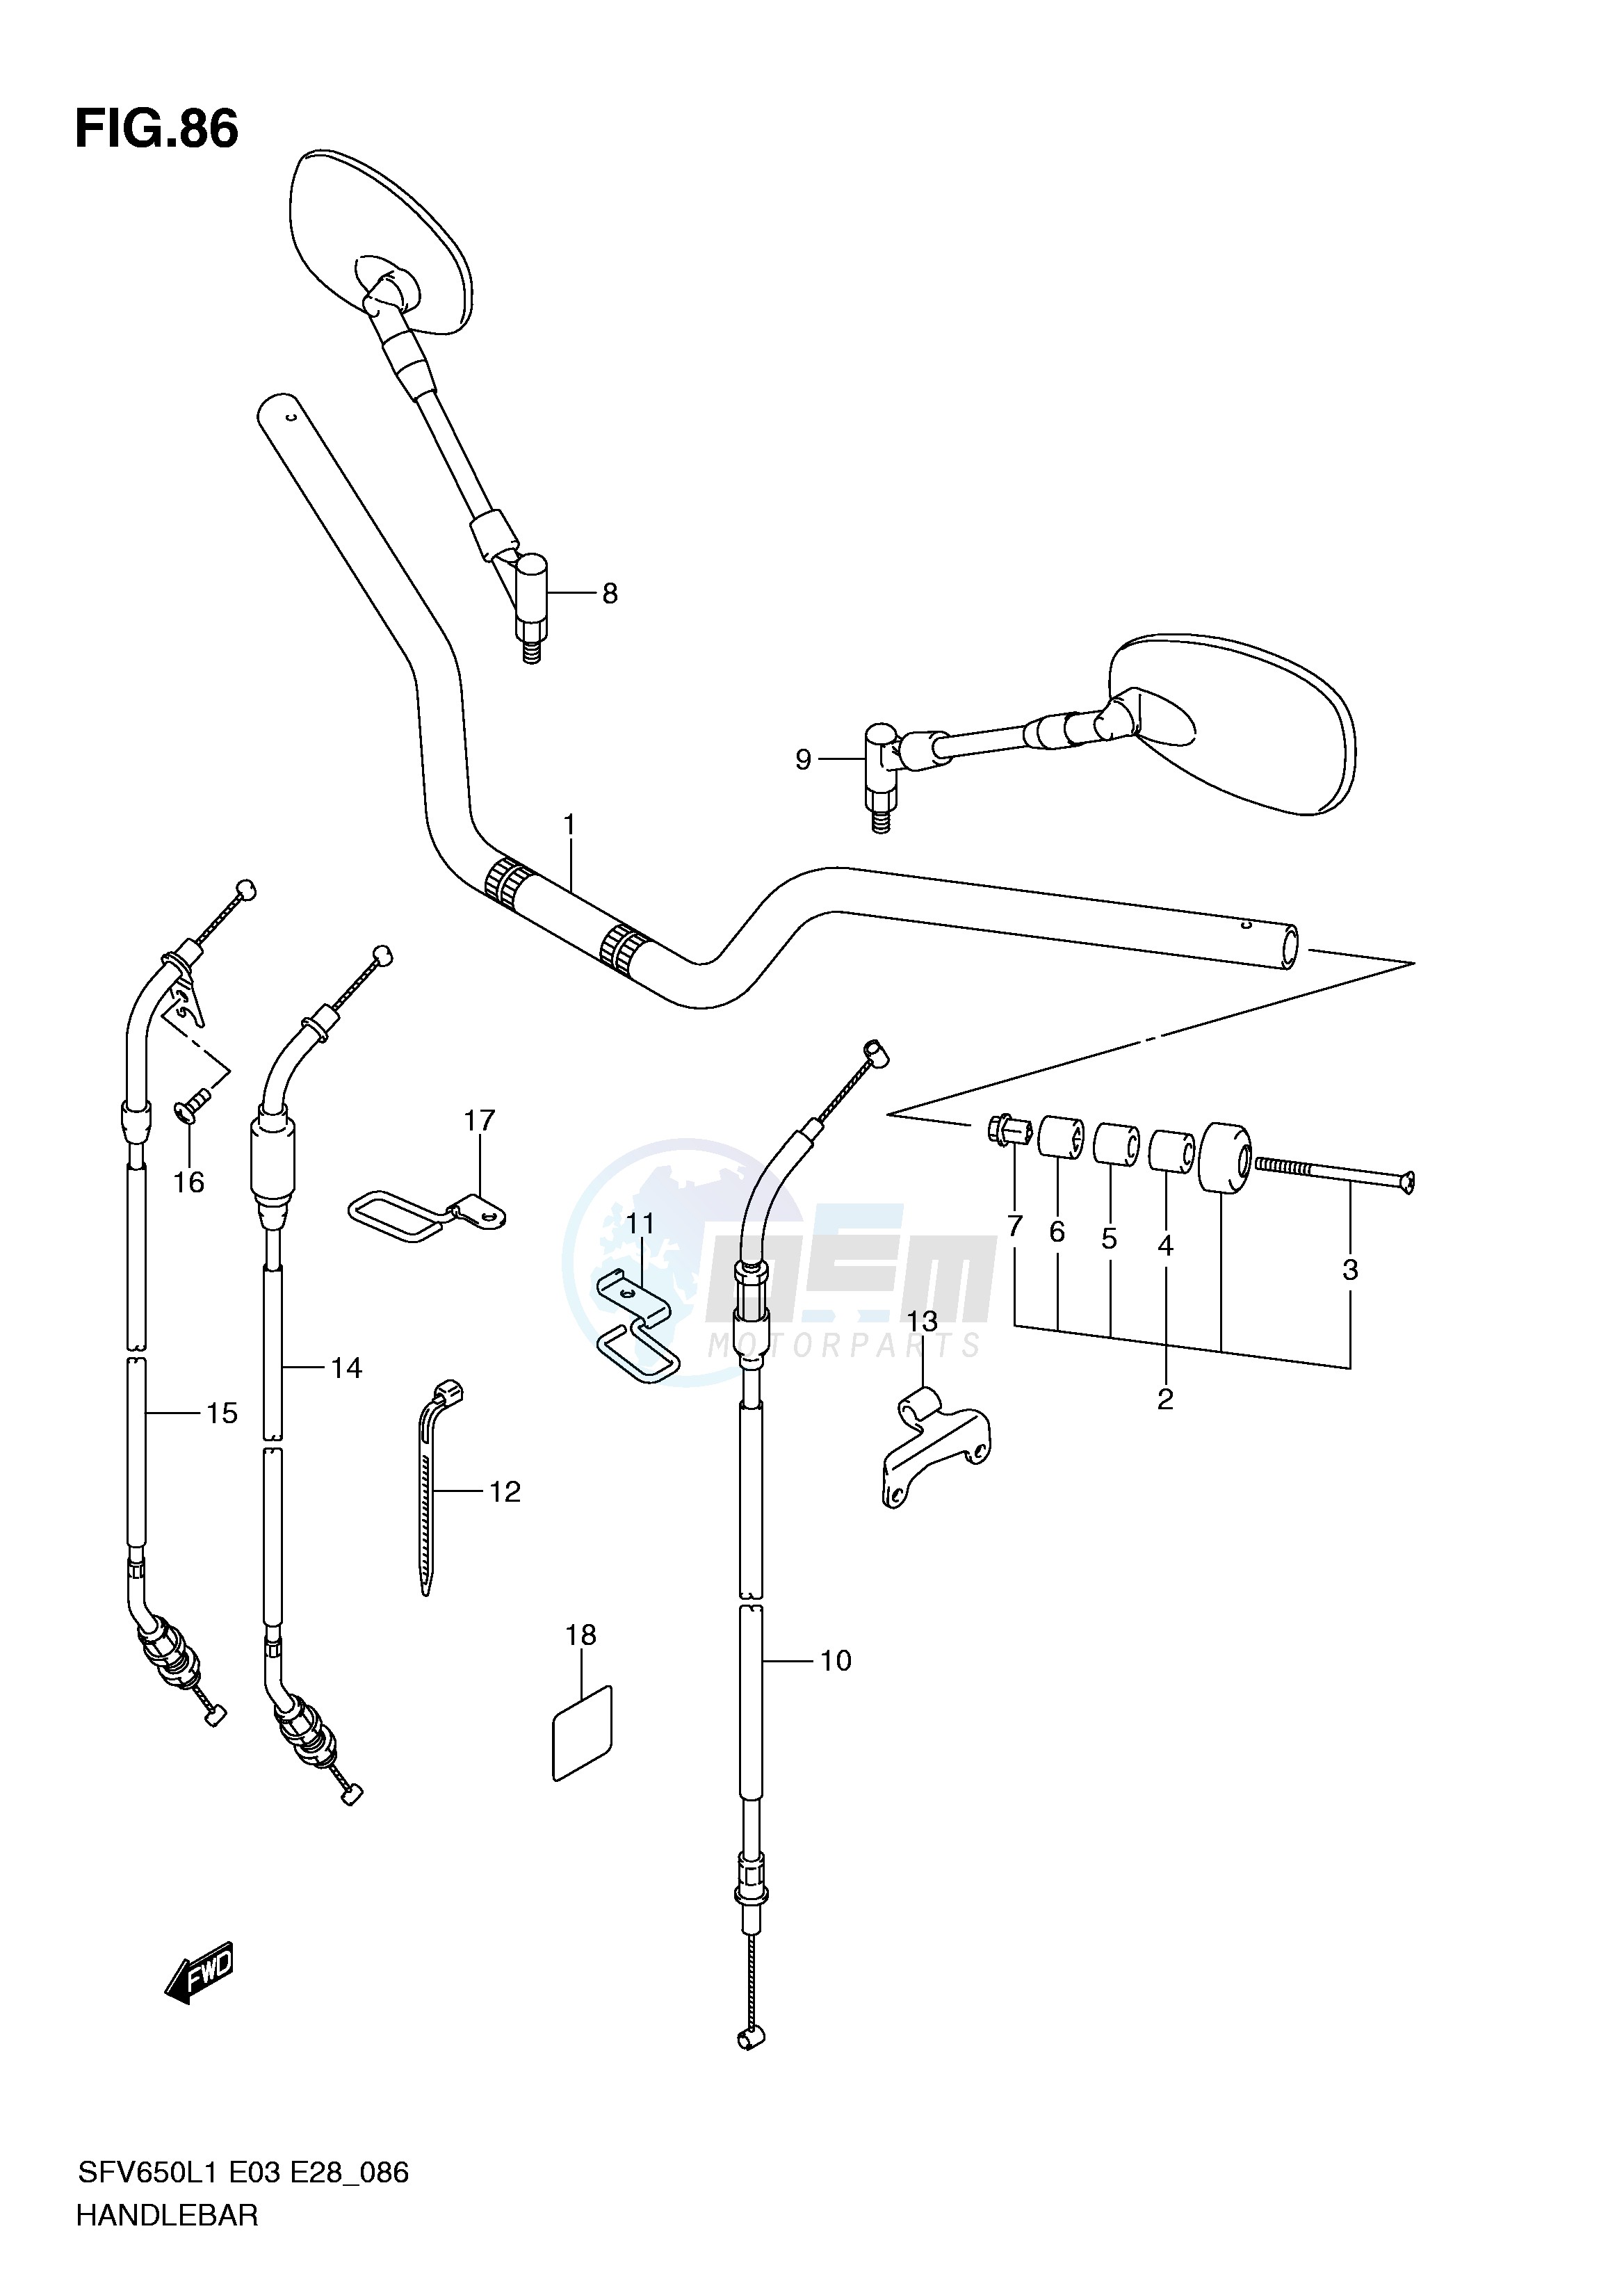 HANDLEBAR (SFV650L1 E28) blueprint